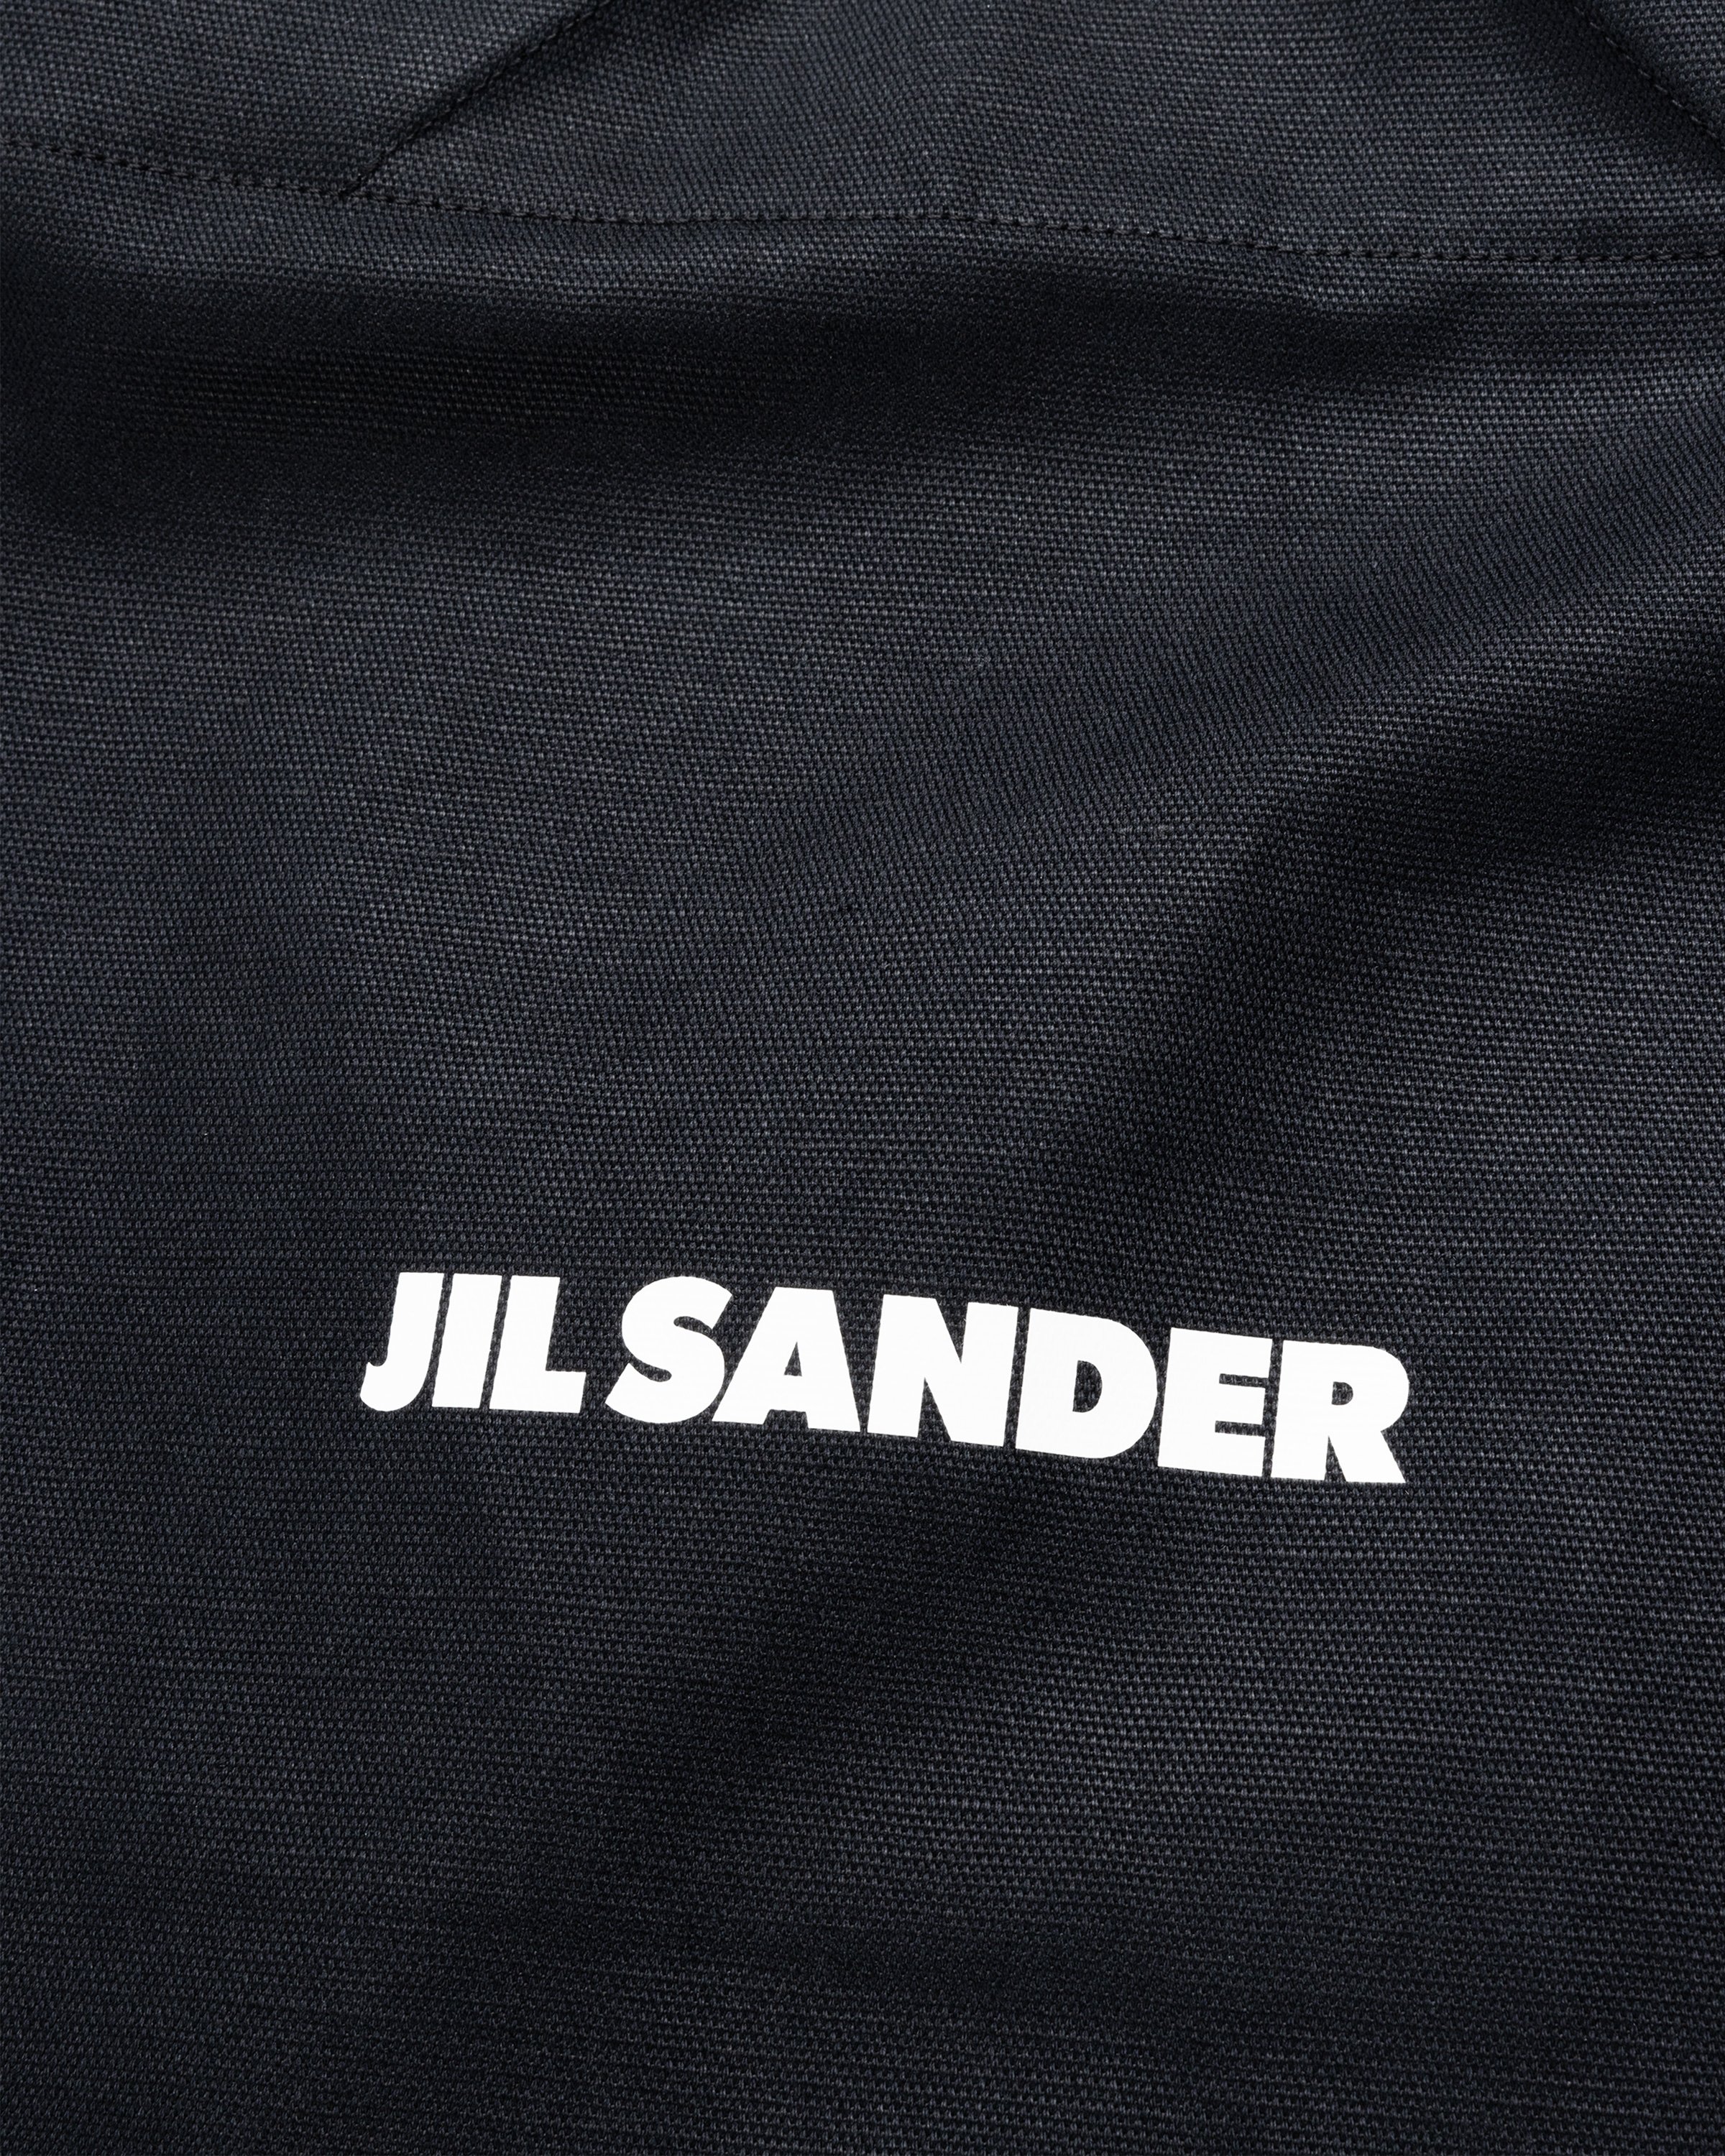 Jil Sander - Book Tote Medium Black - Accessories - Black - Image 6